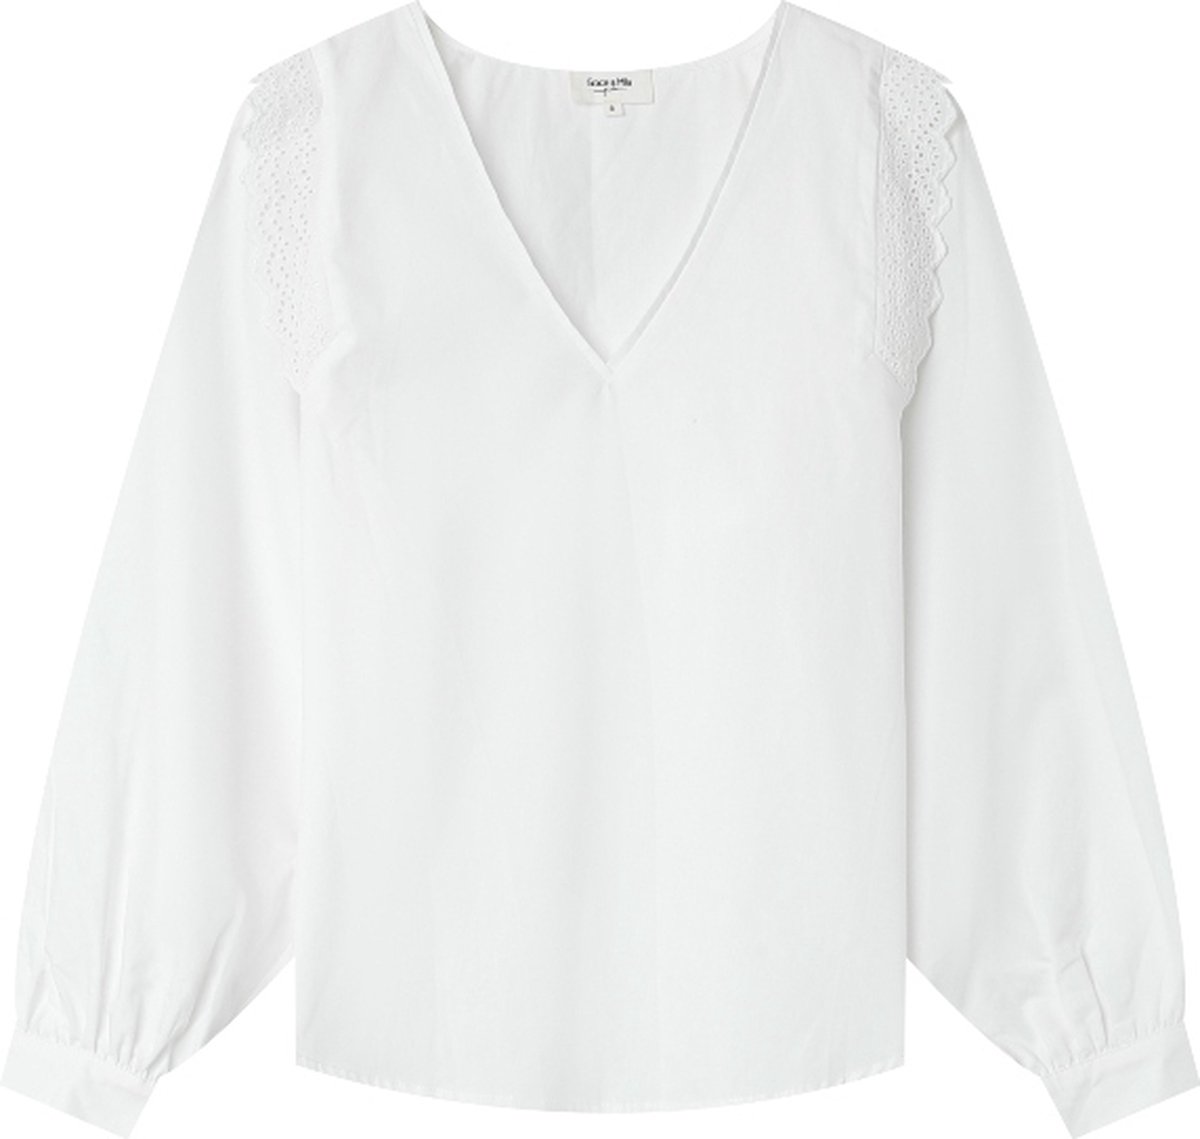 Witte blouse met ruches Geza - Grace & Mila - Maat S